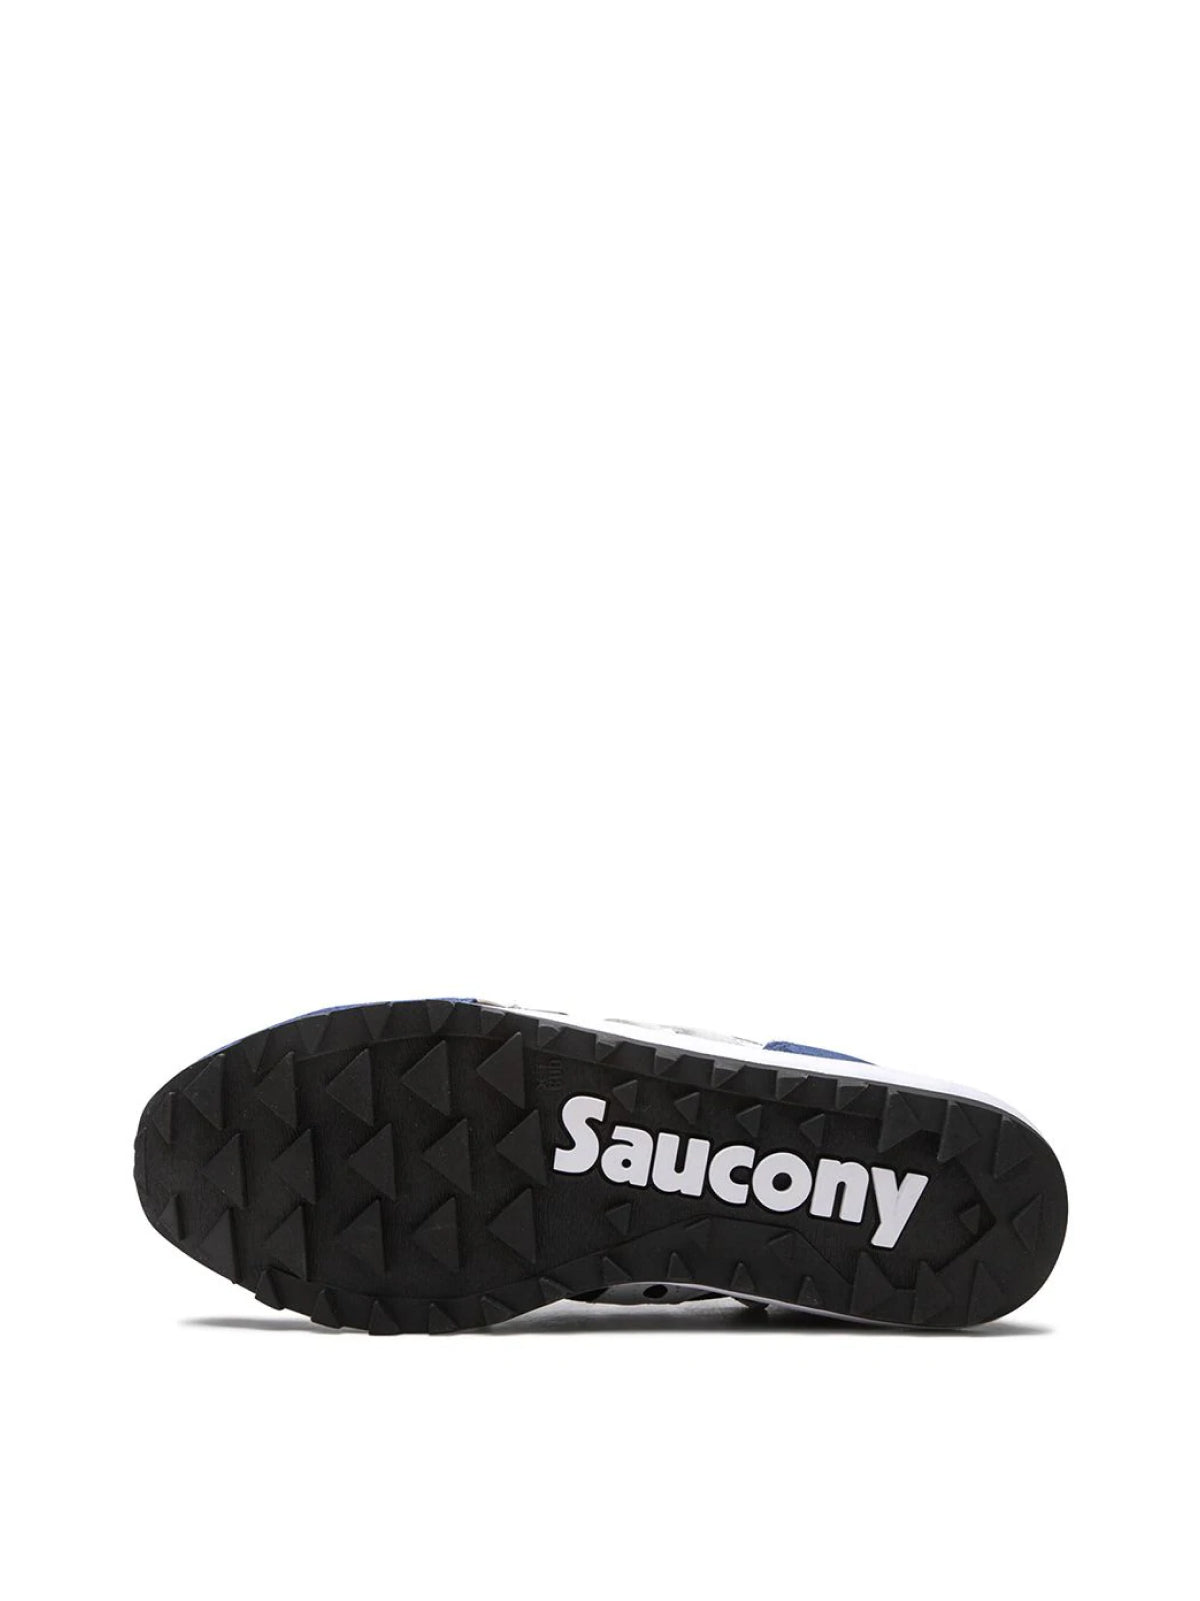 Saucony-OUTLET-SALE-Jazz DST Sneakers-ARCHIVIST